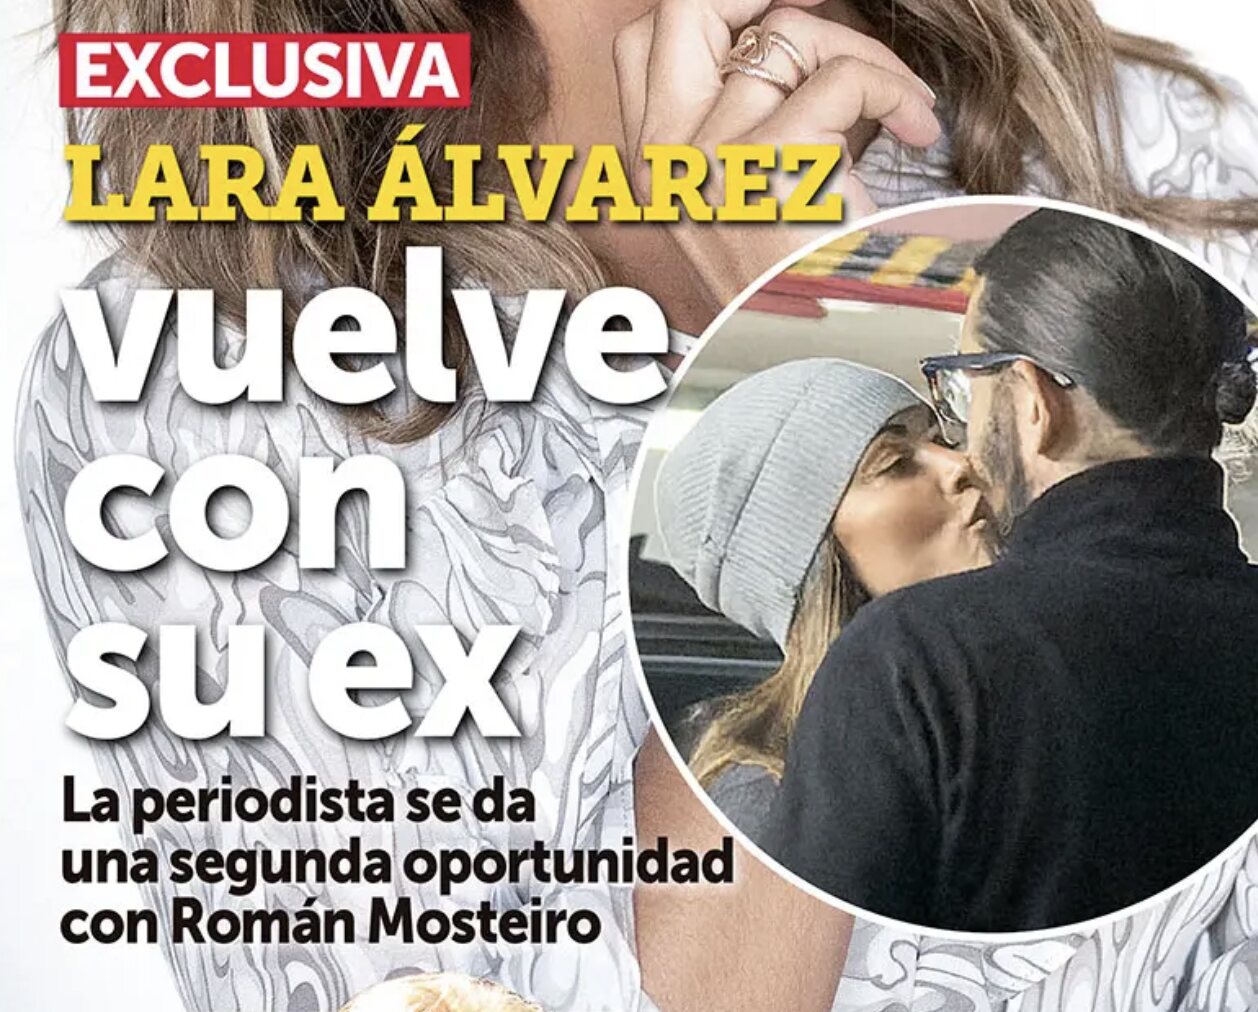 Lara Álvarez y Román Mosteiro en la portada de Semana